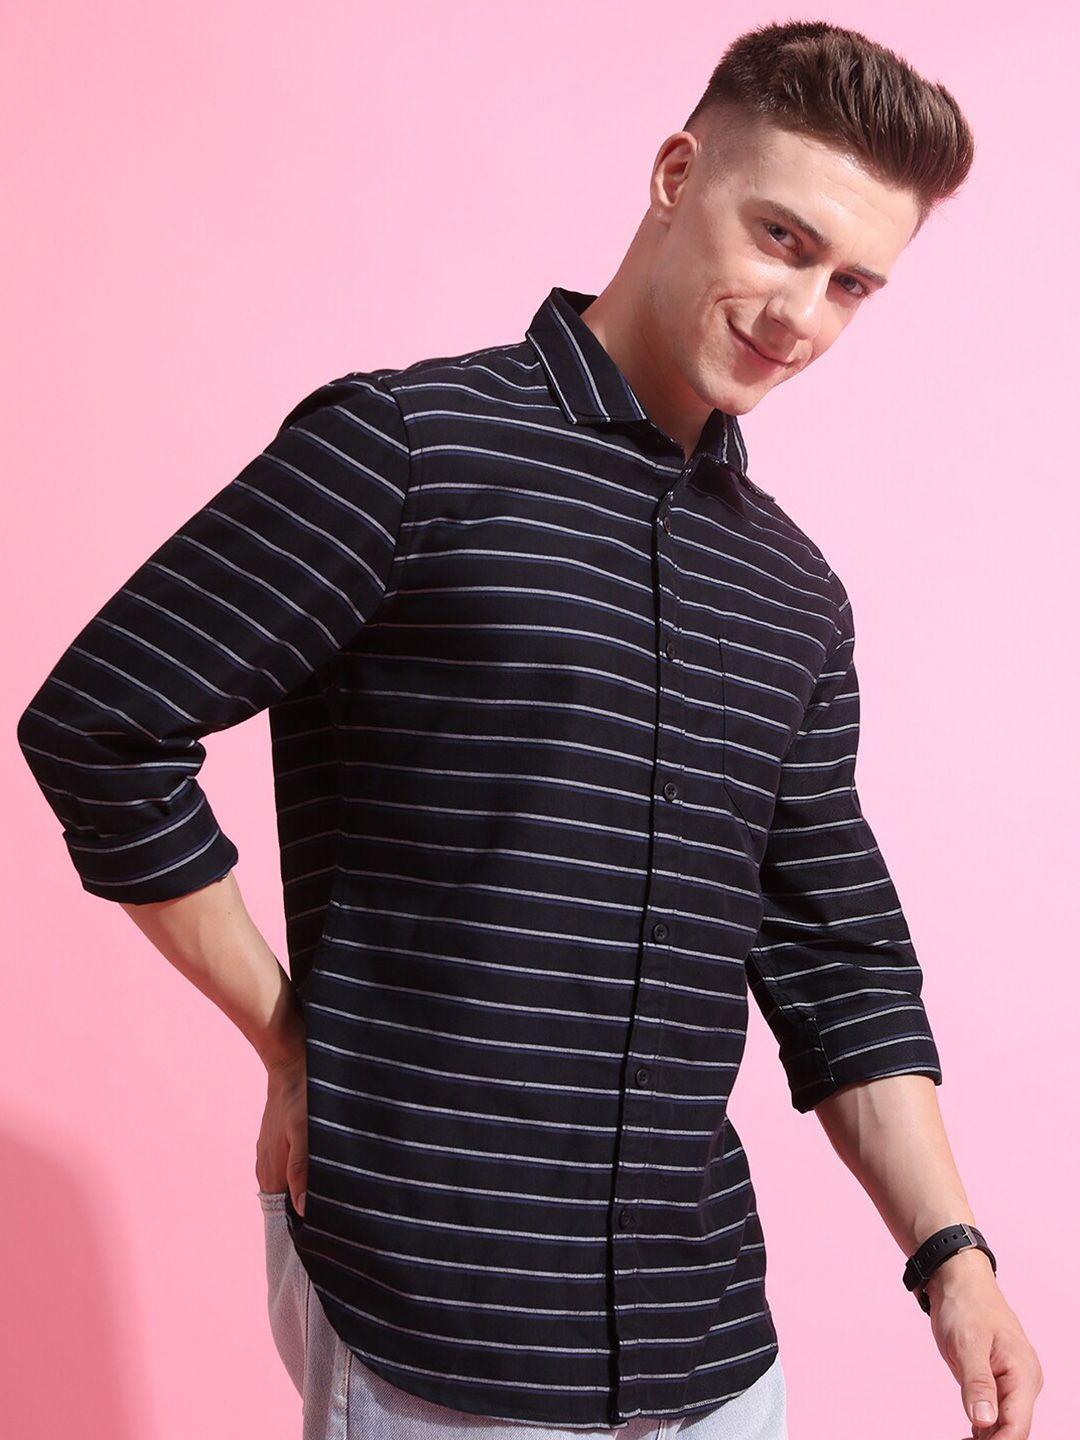 ketch black slim fit horizontal striped casual shirt